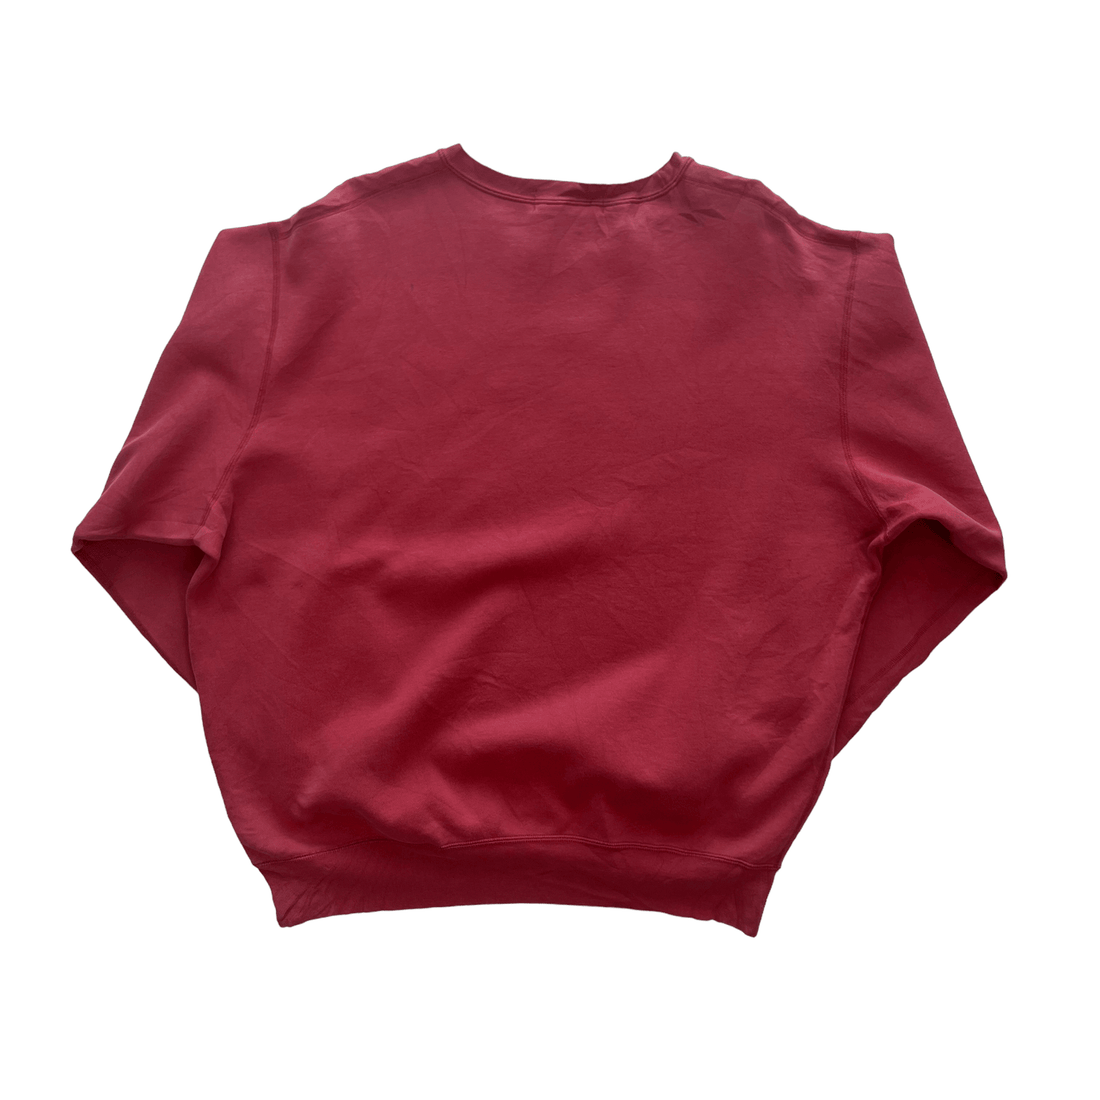 Vintage 90s Pink/ Red Polo Ralph Lauren Sweatshirt - Large - The Streetwear Studio